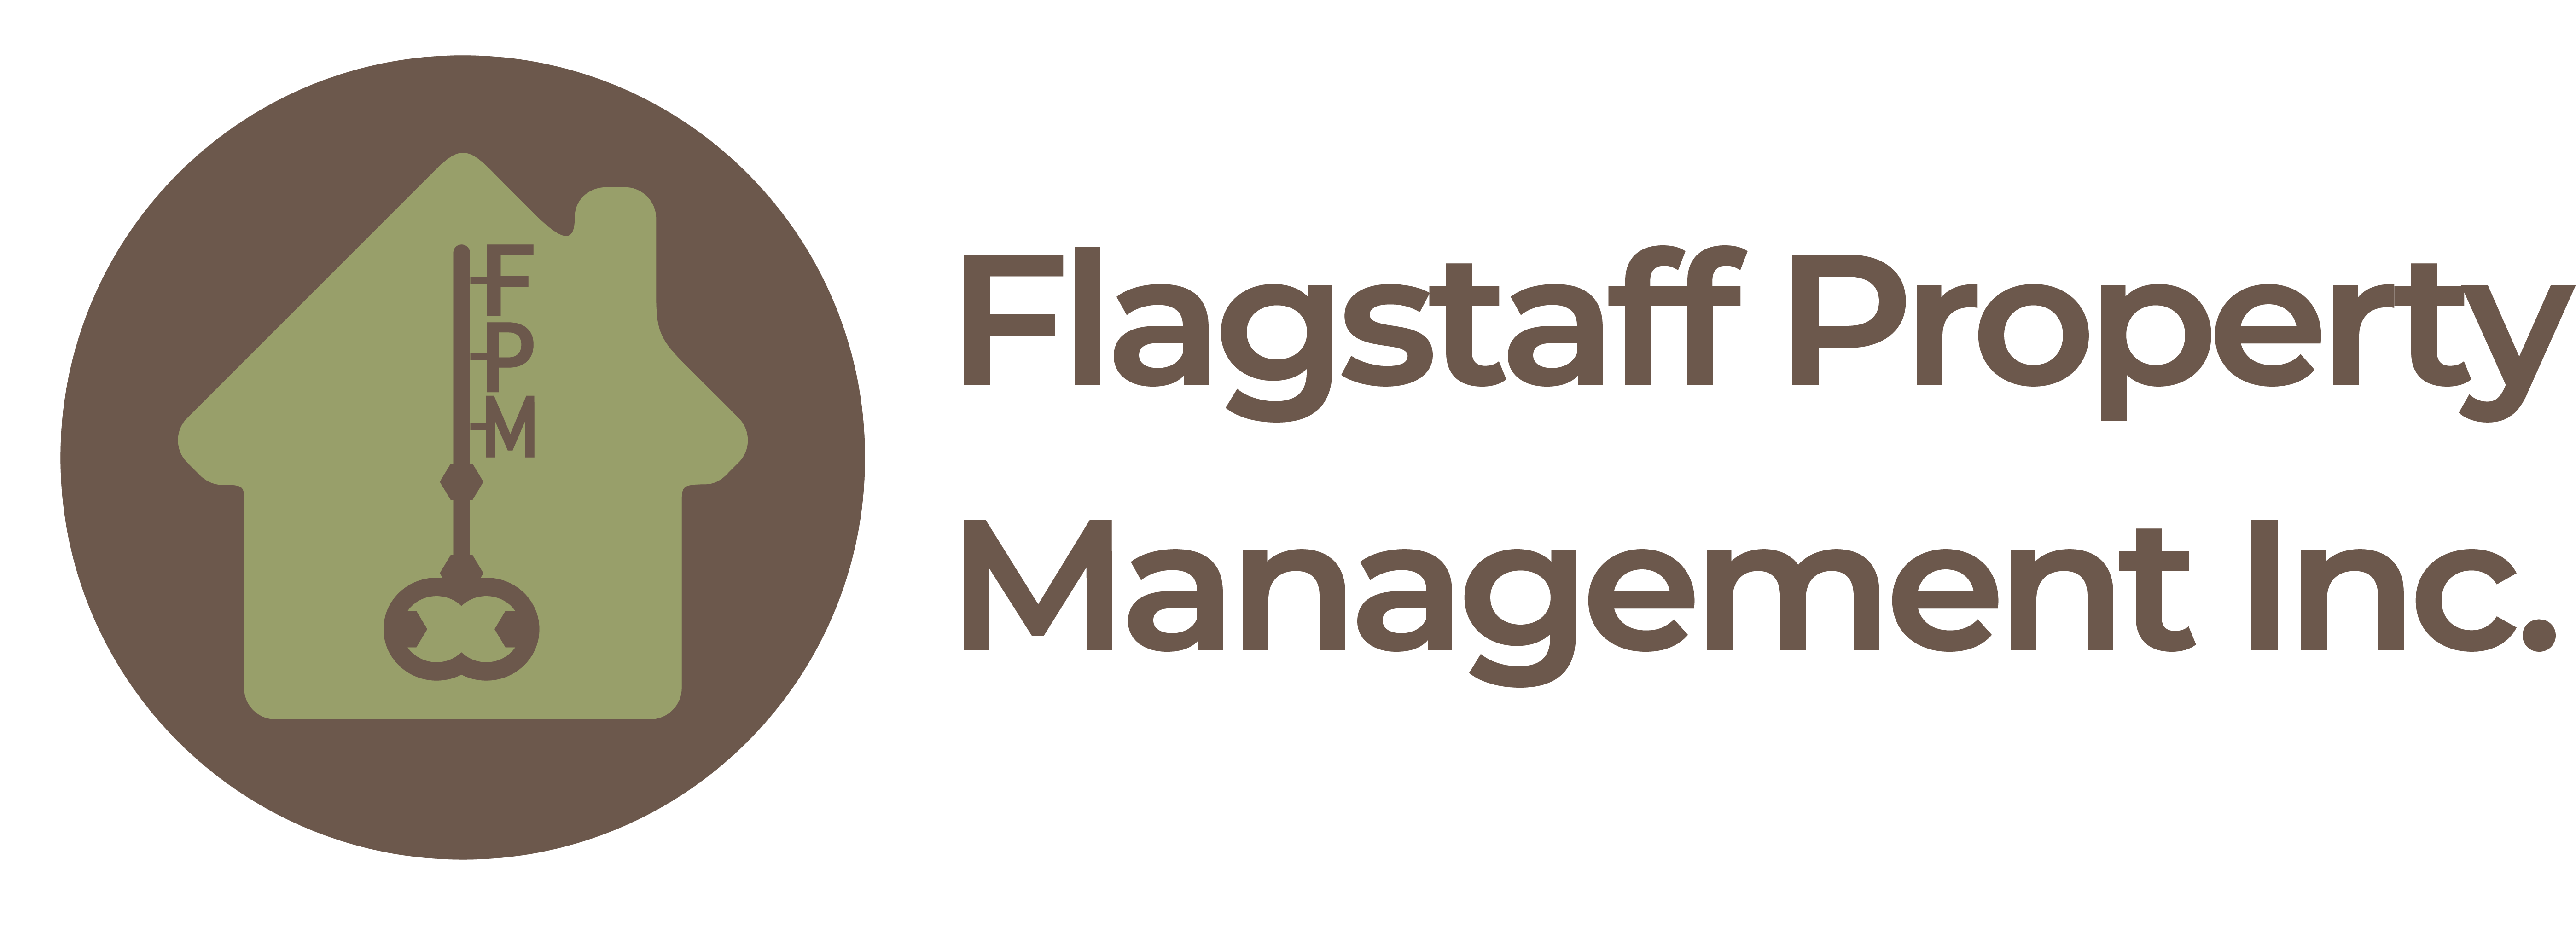 Flagstaff Property Management